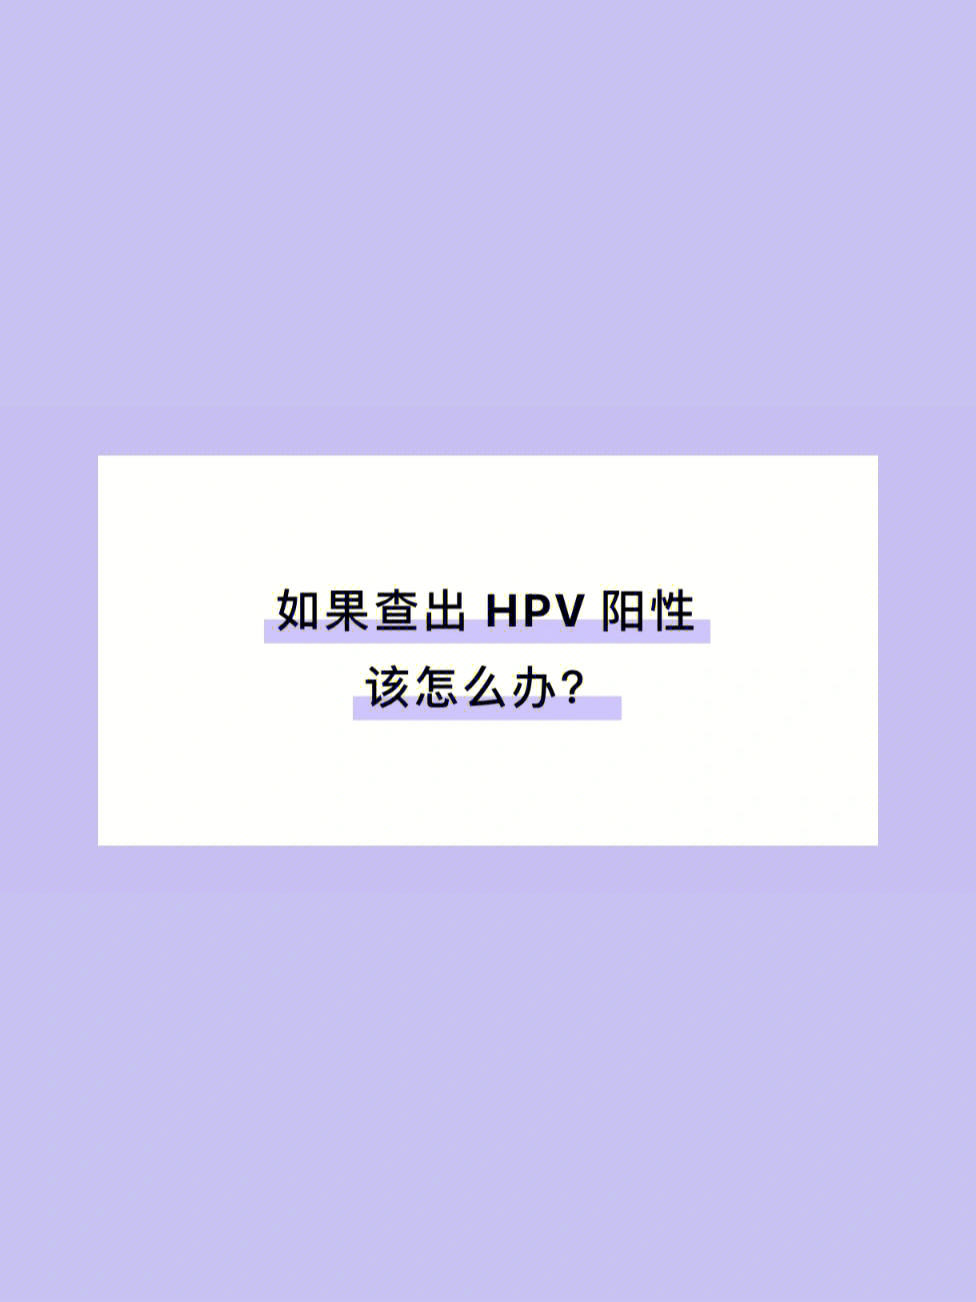 hpv68阳性是什么意思图片